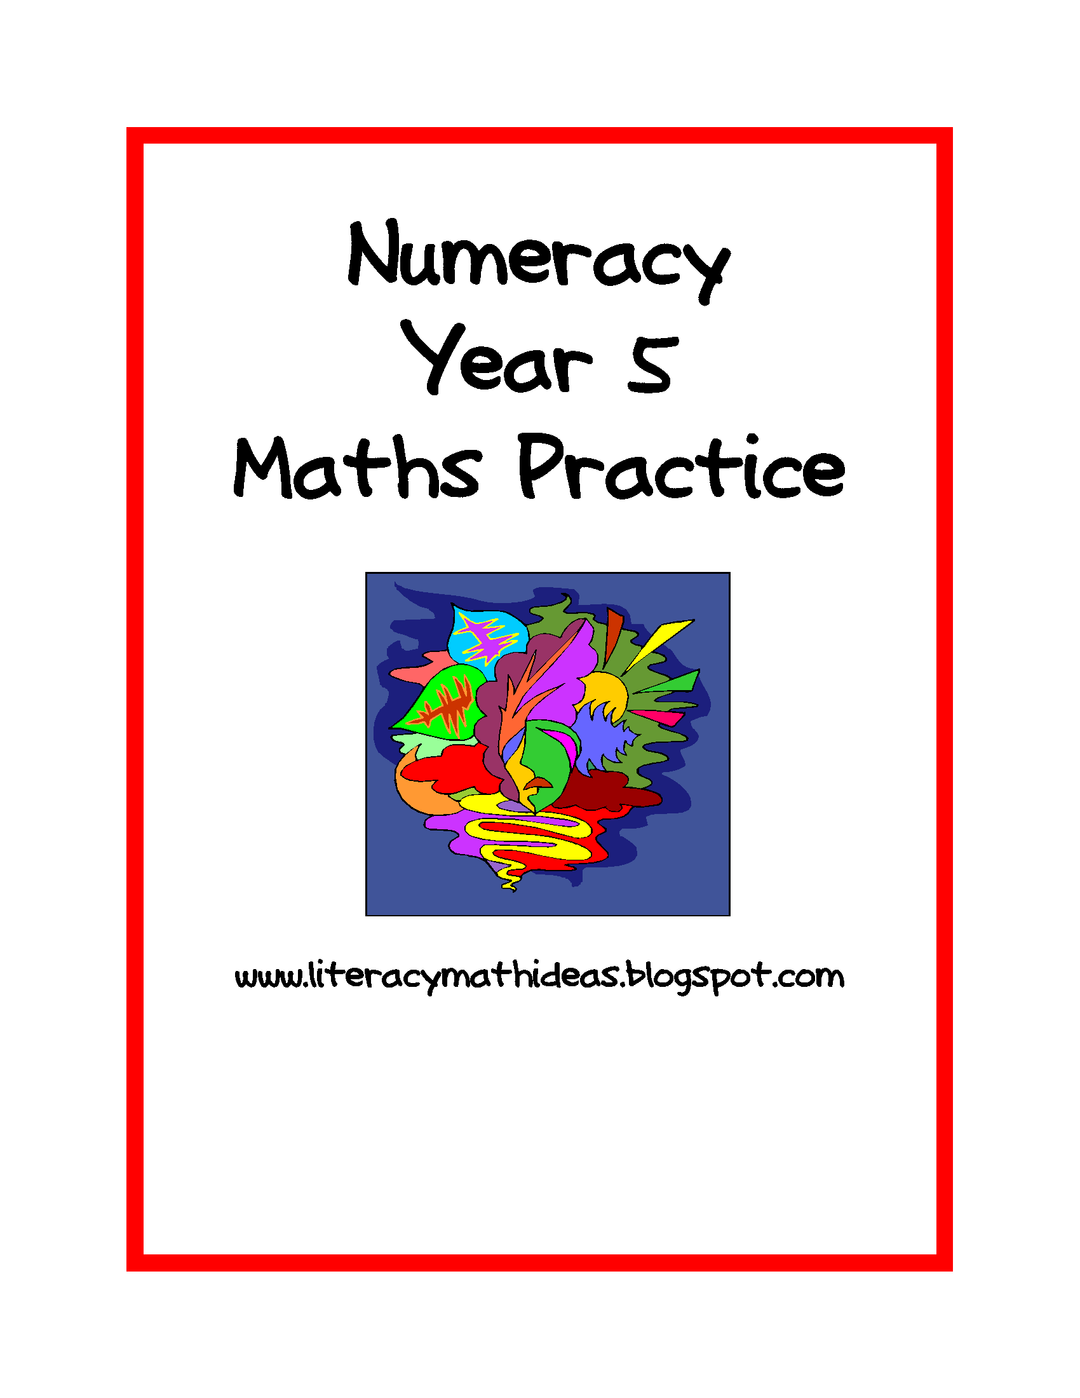 Numeracy Year 5 Maths Practice